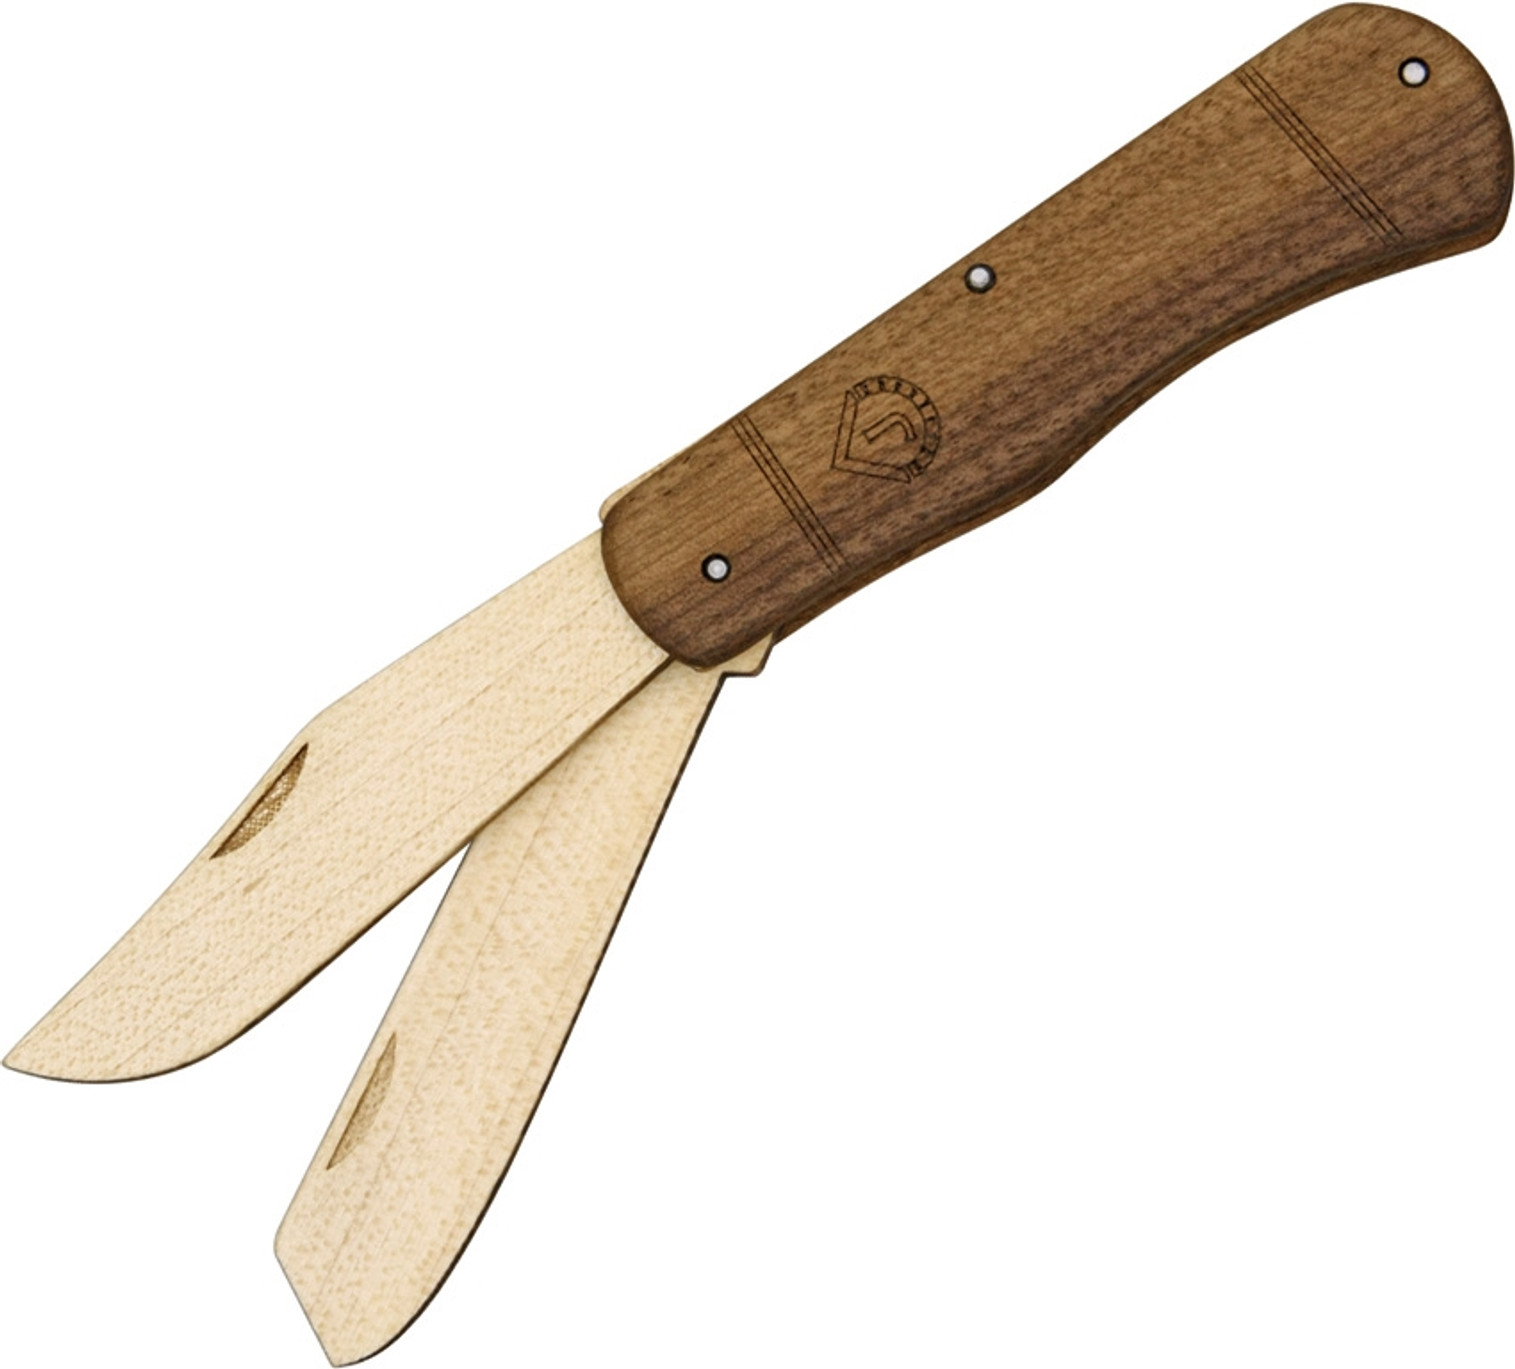 Trapper Knife Kit